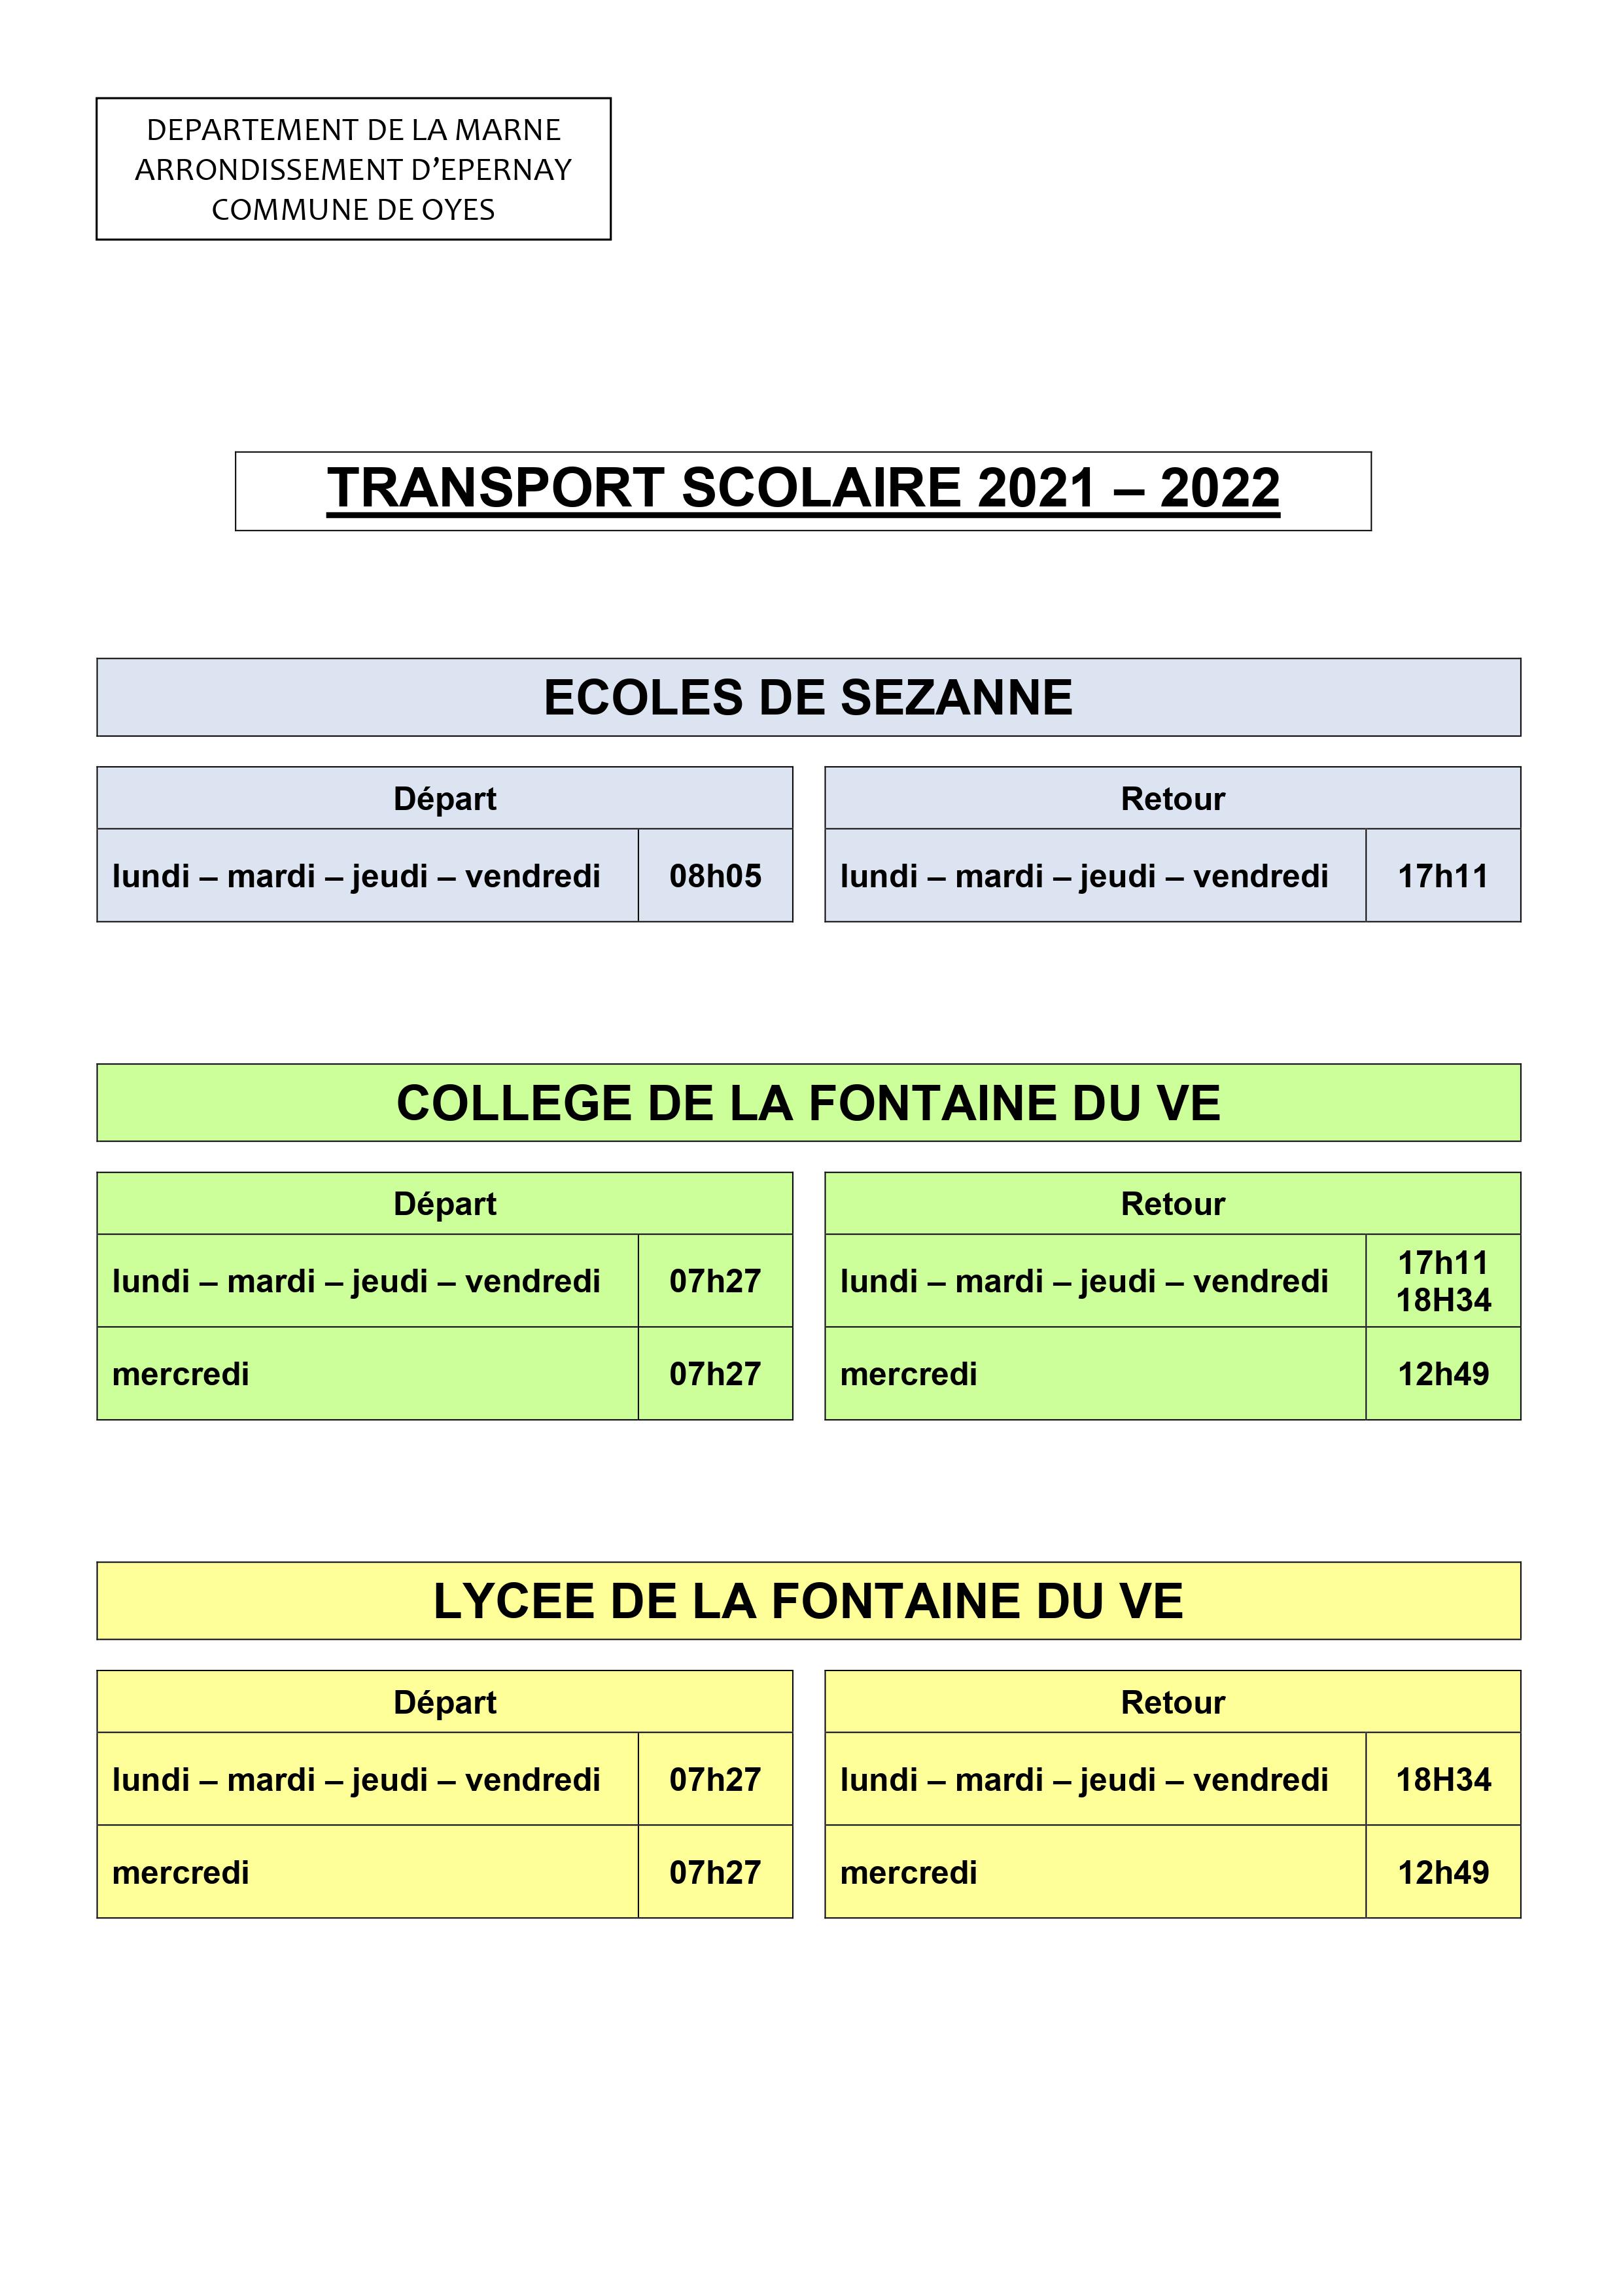 TRANSPORT SCOLAIRE 2021